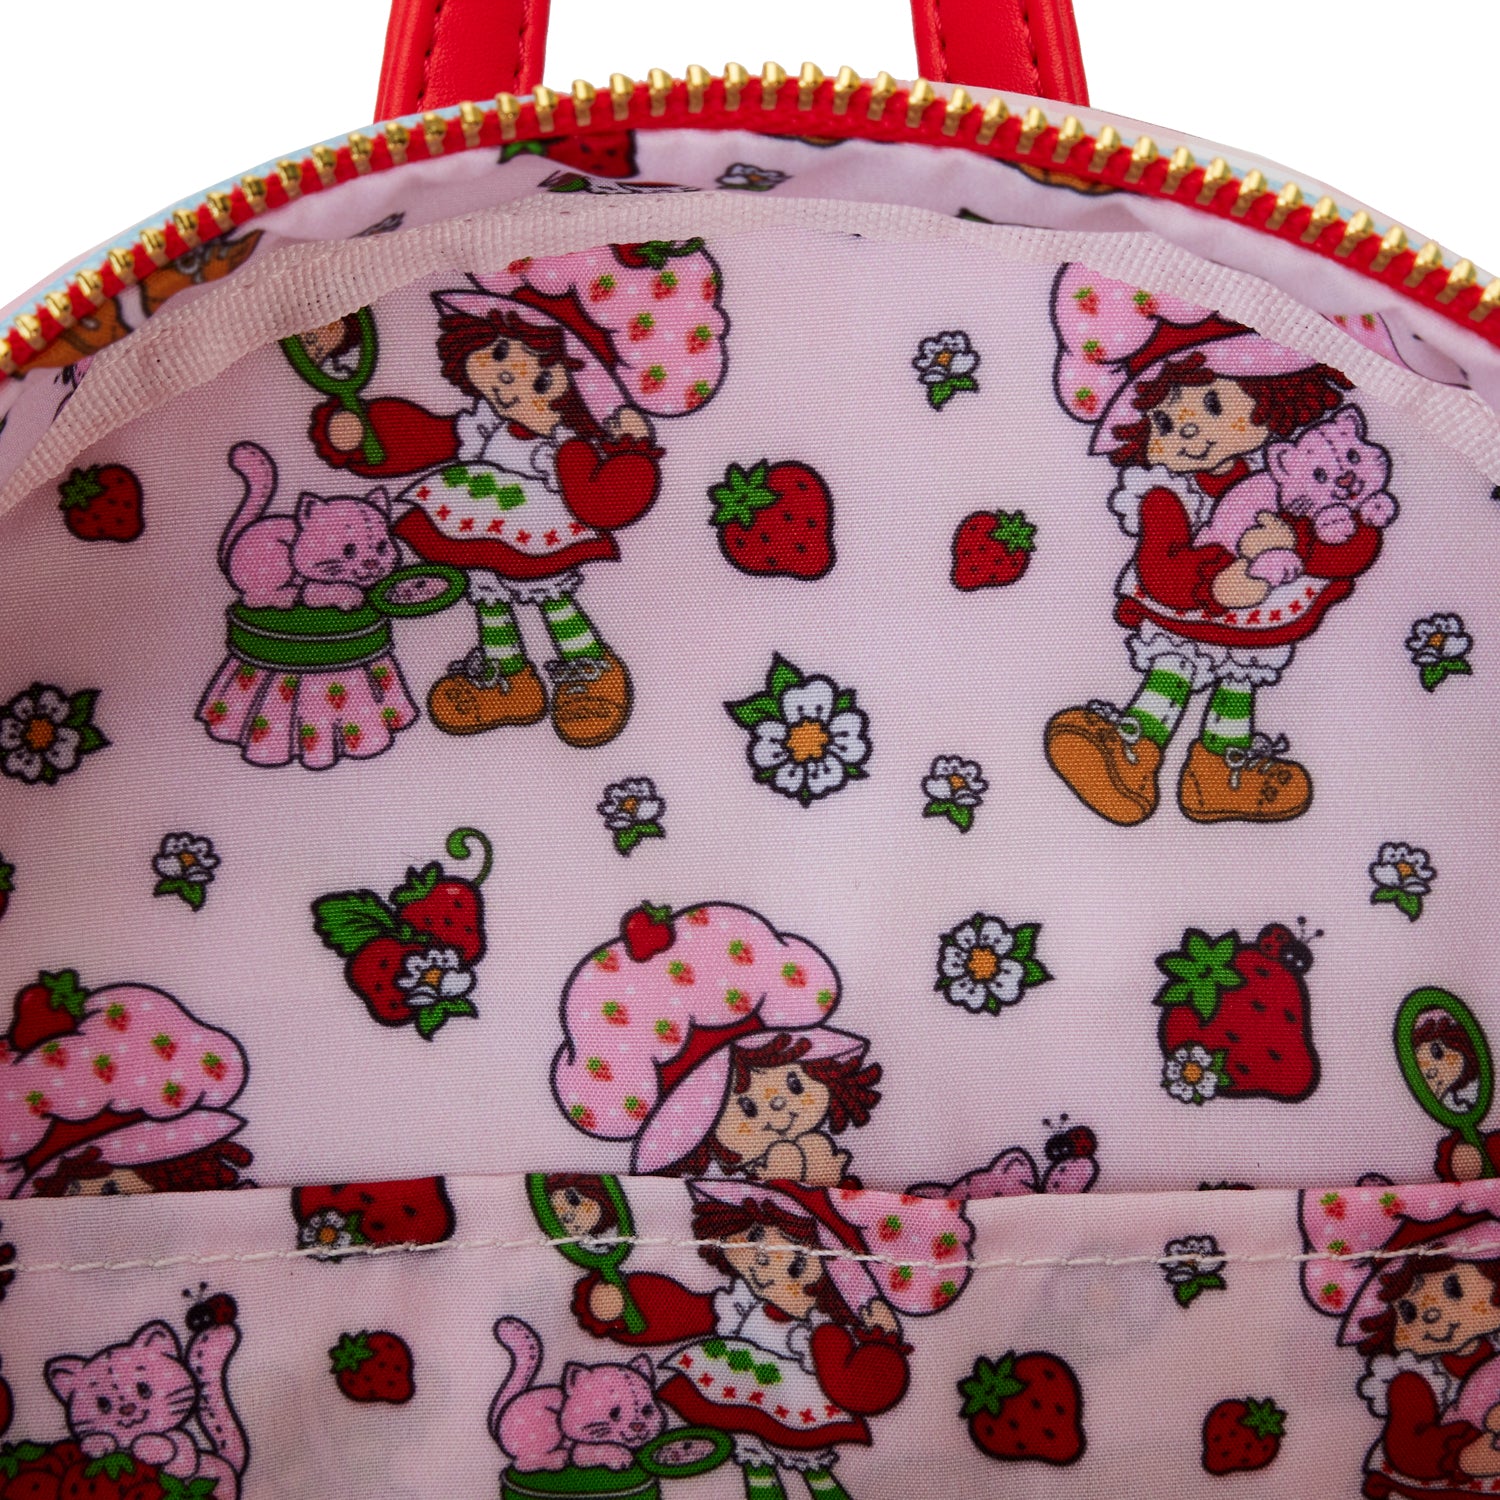 Strawberry Shortcake | Denim Pocket Mini Backpack